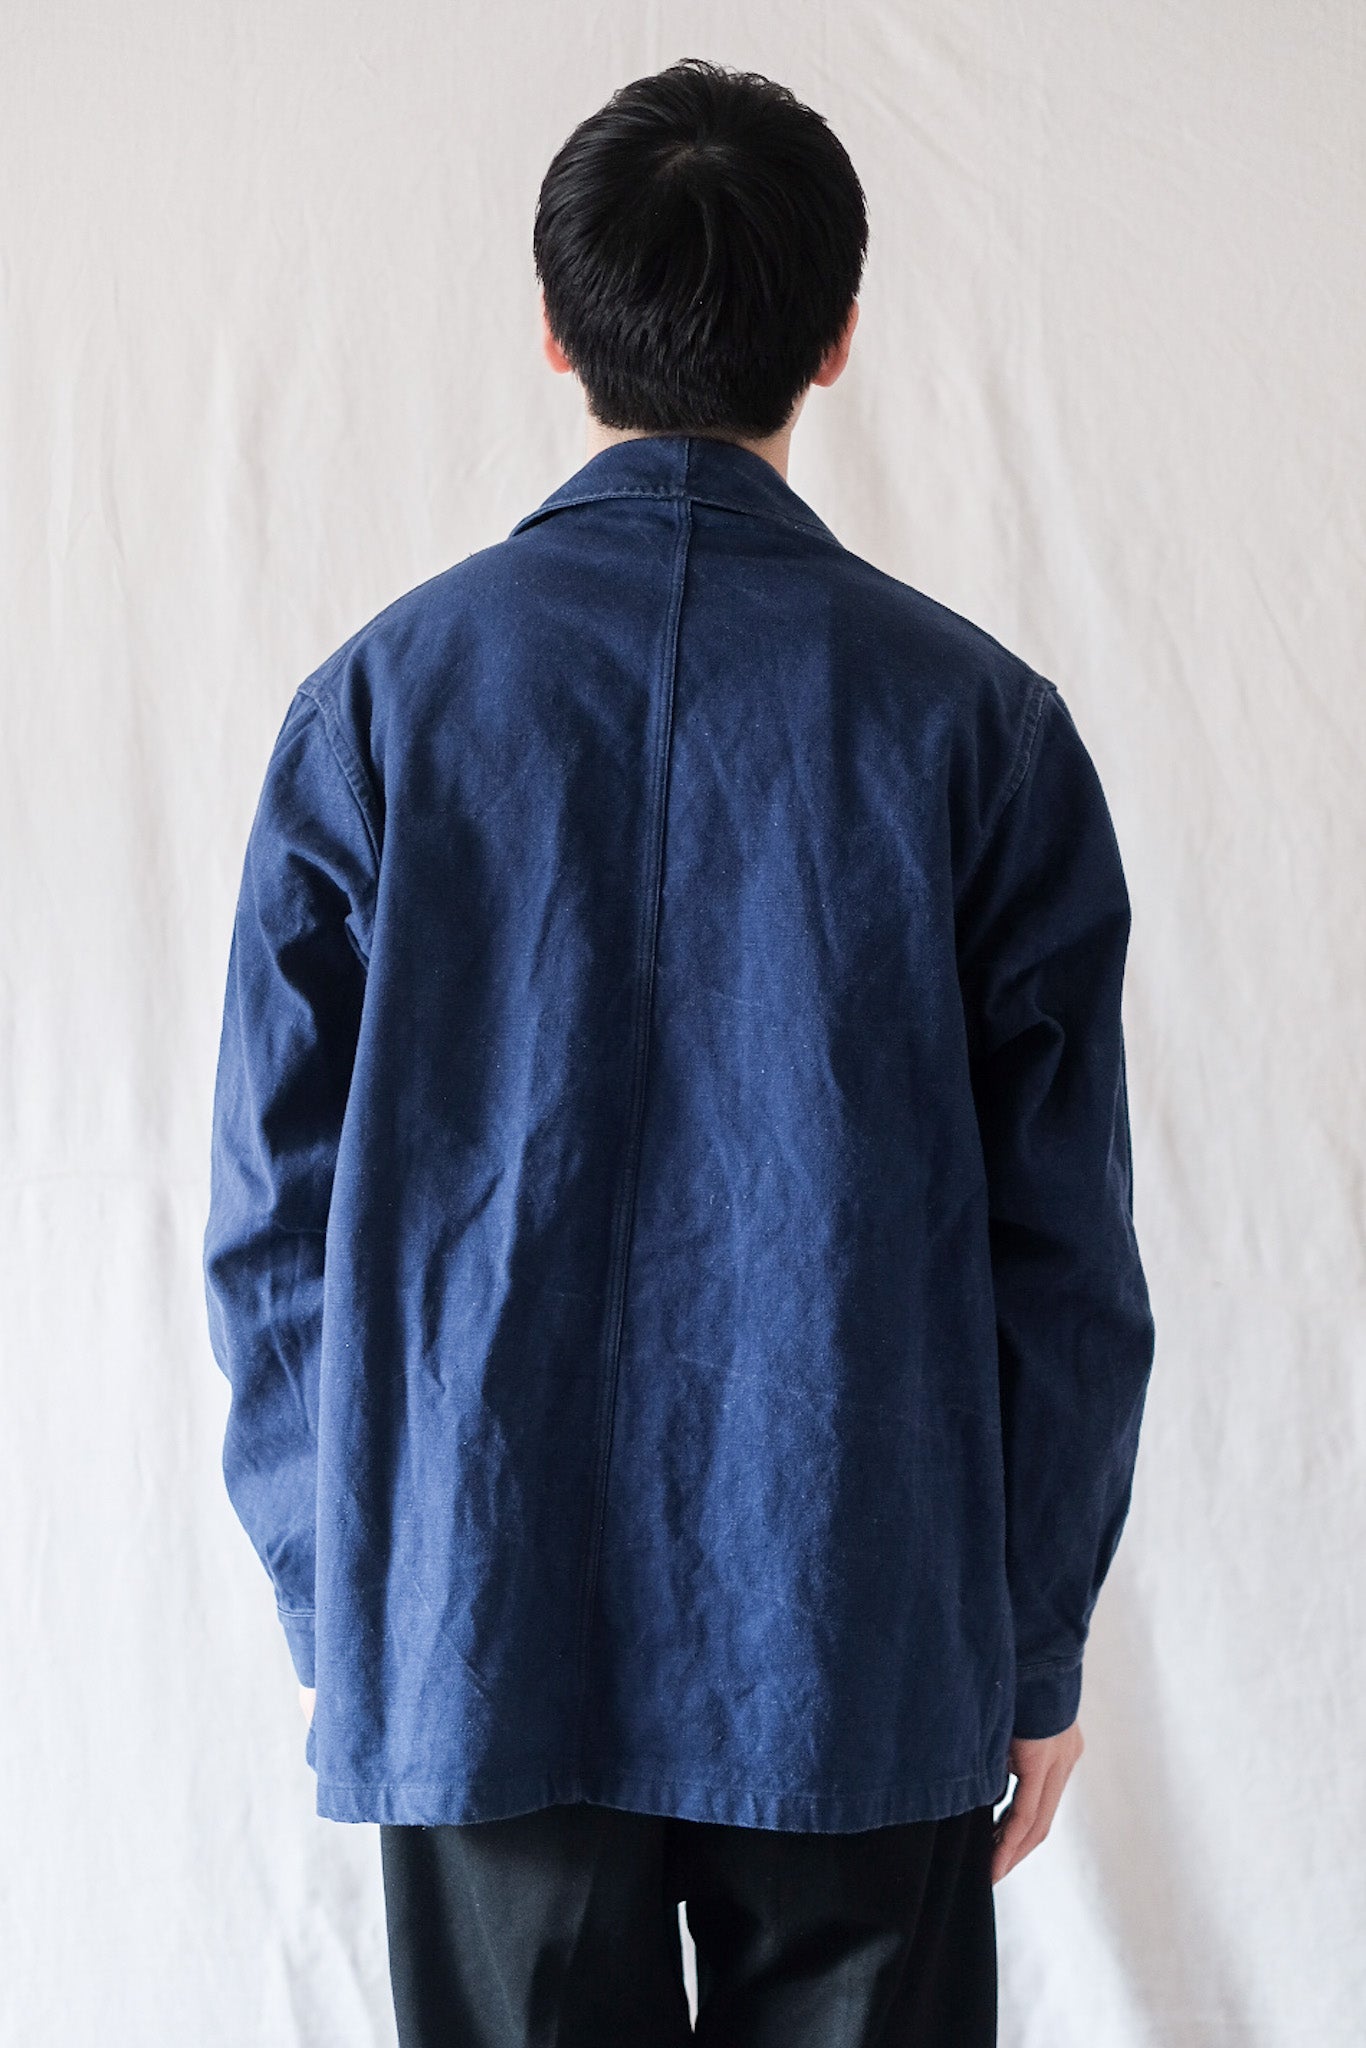 [~ 40's] French Vintage Blue Cotton Twil Work Jacket